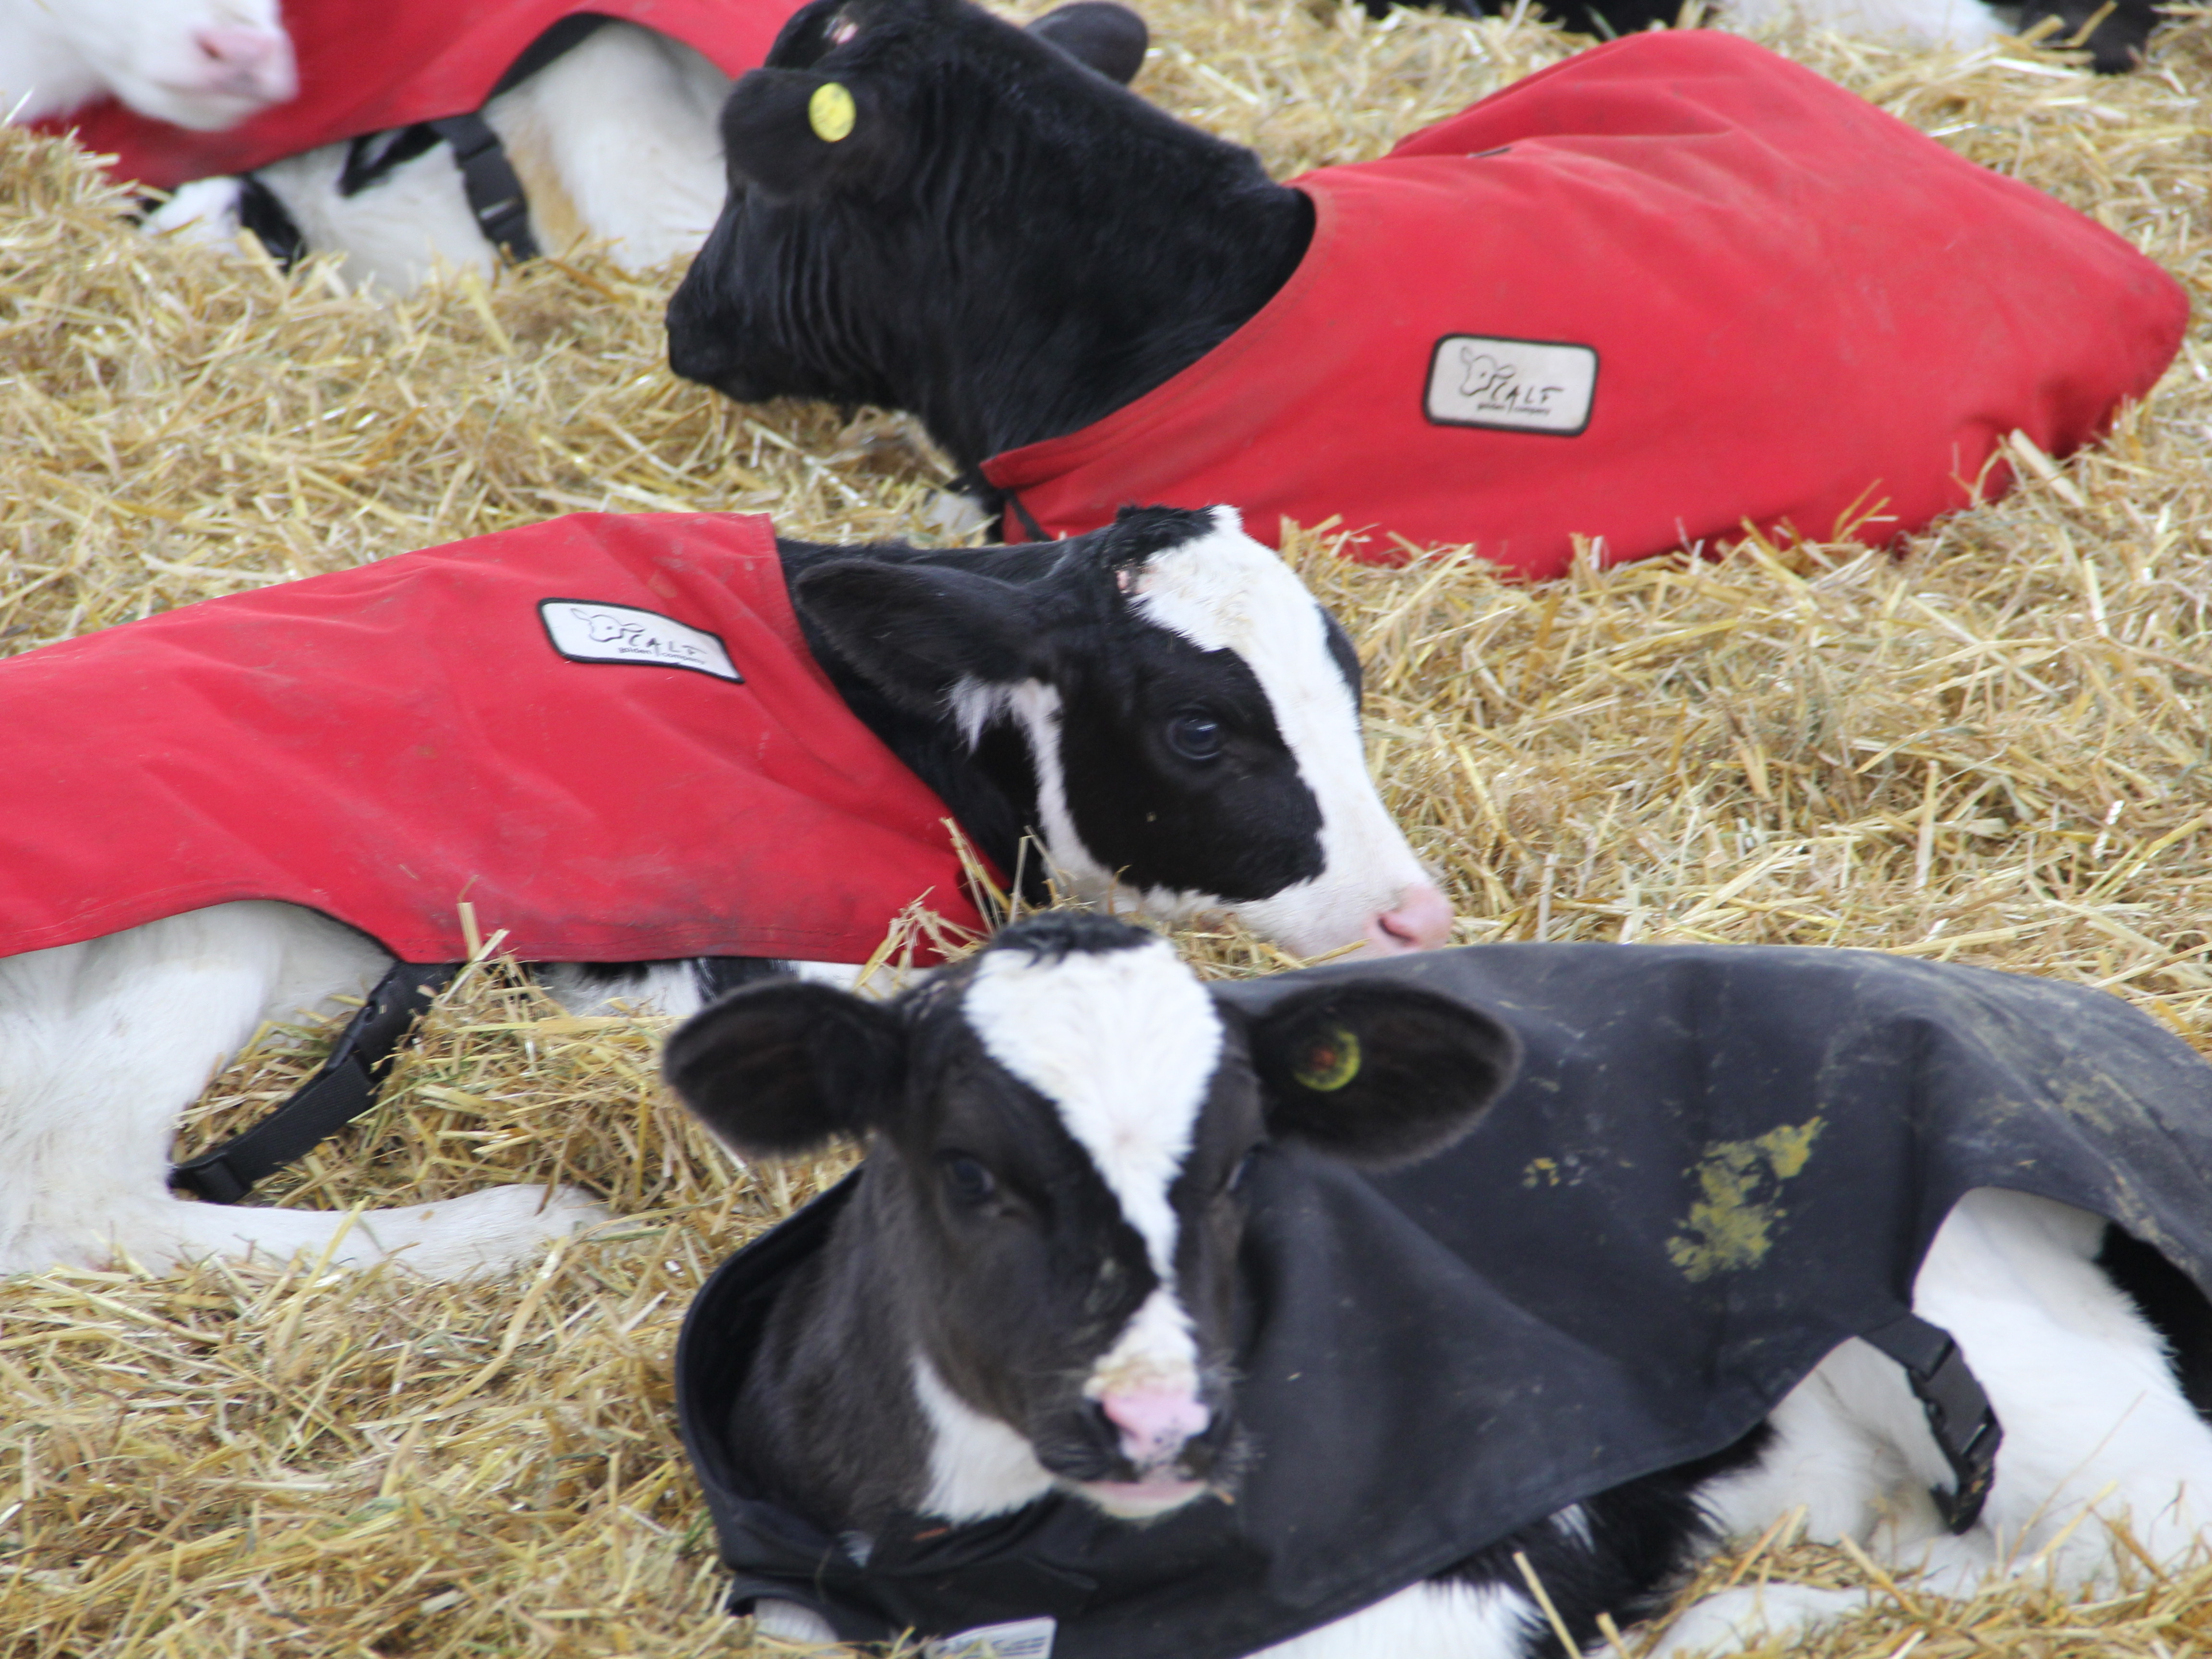 Holstein Dairy Calves lying in fresh straw, wearing calf blankets to help keep warm.